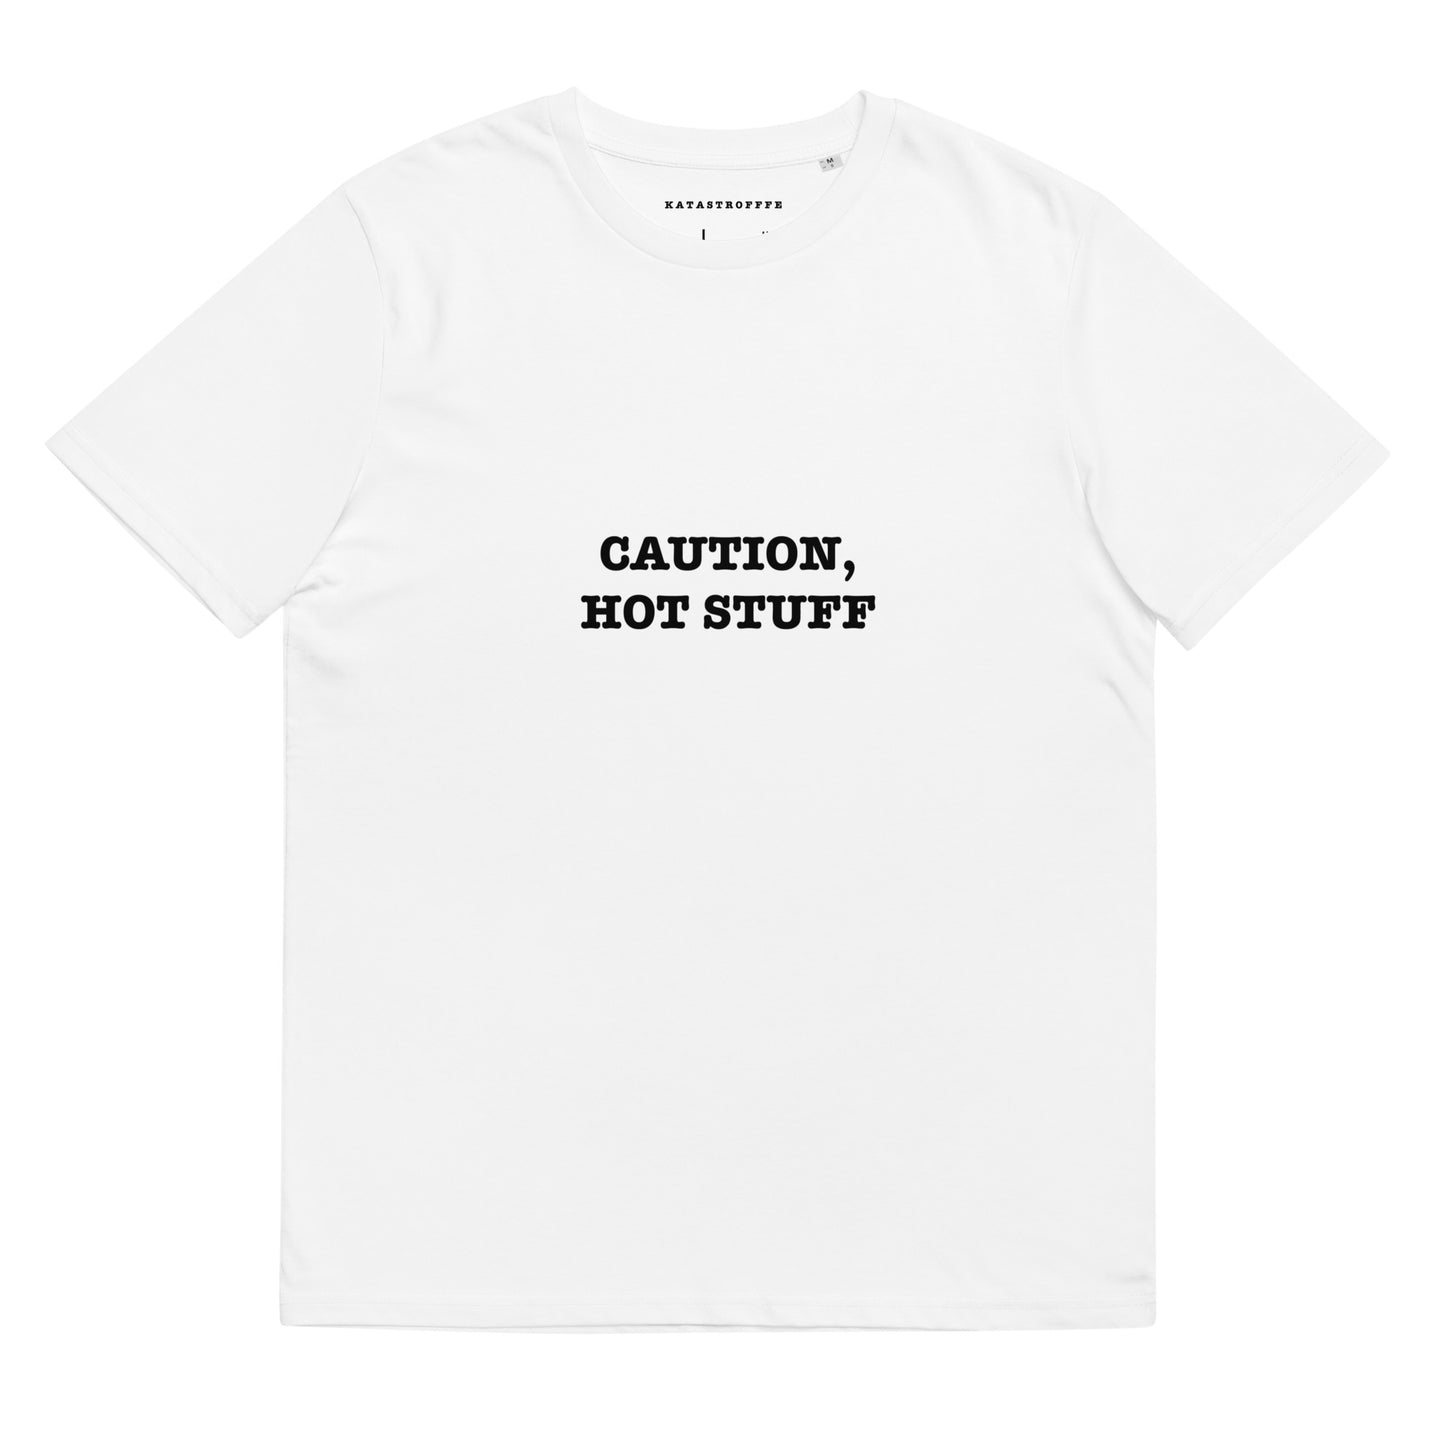 CAUTION HOT STUFF Katastrofffe Unisex organic cotton t-shirt